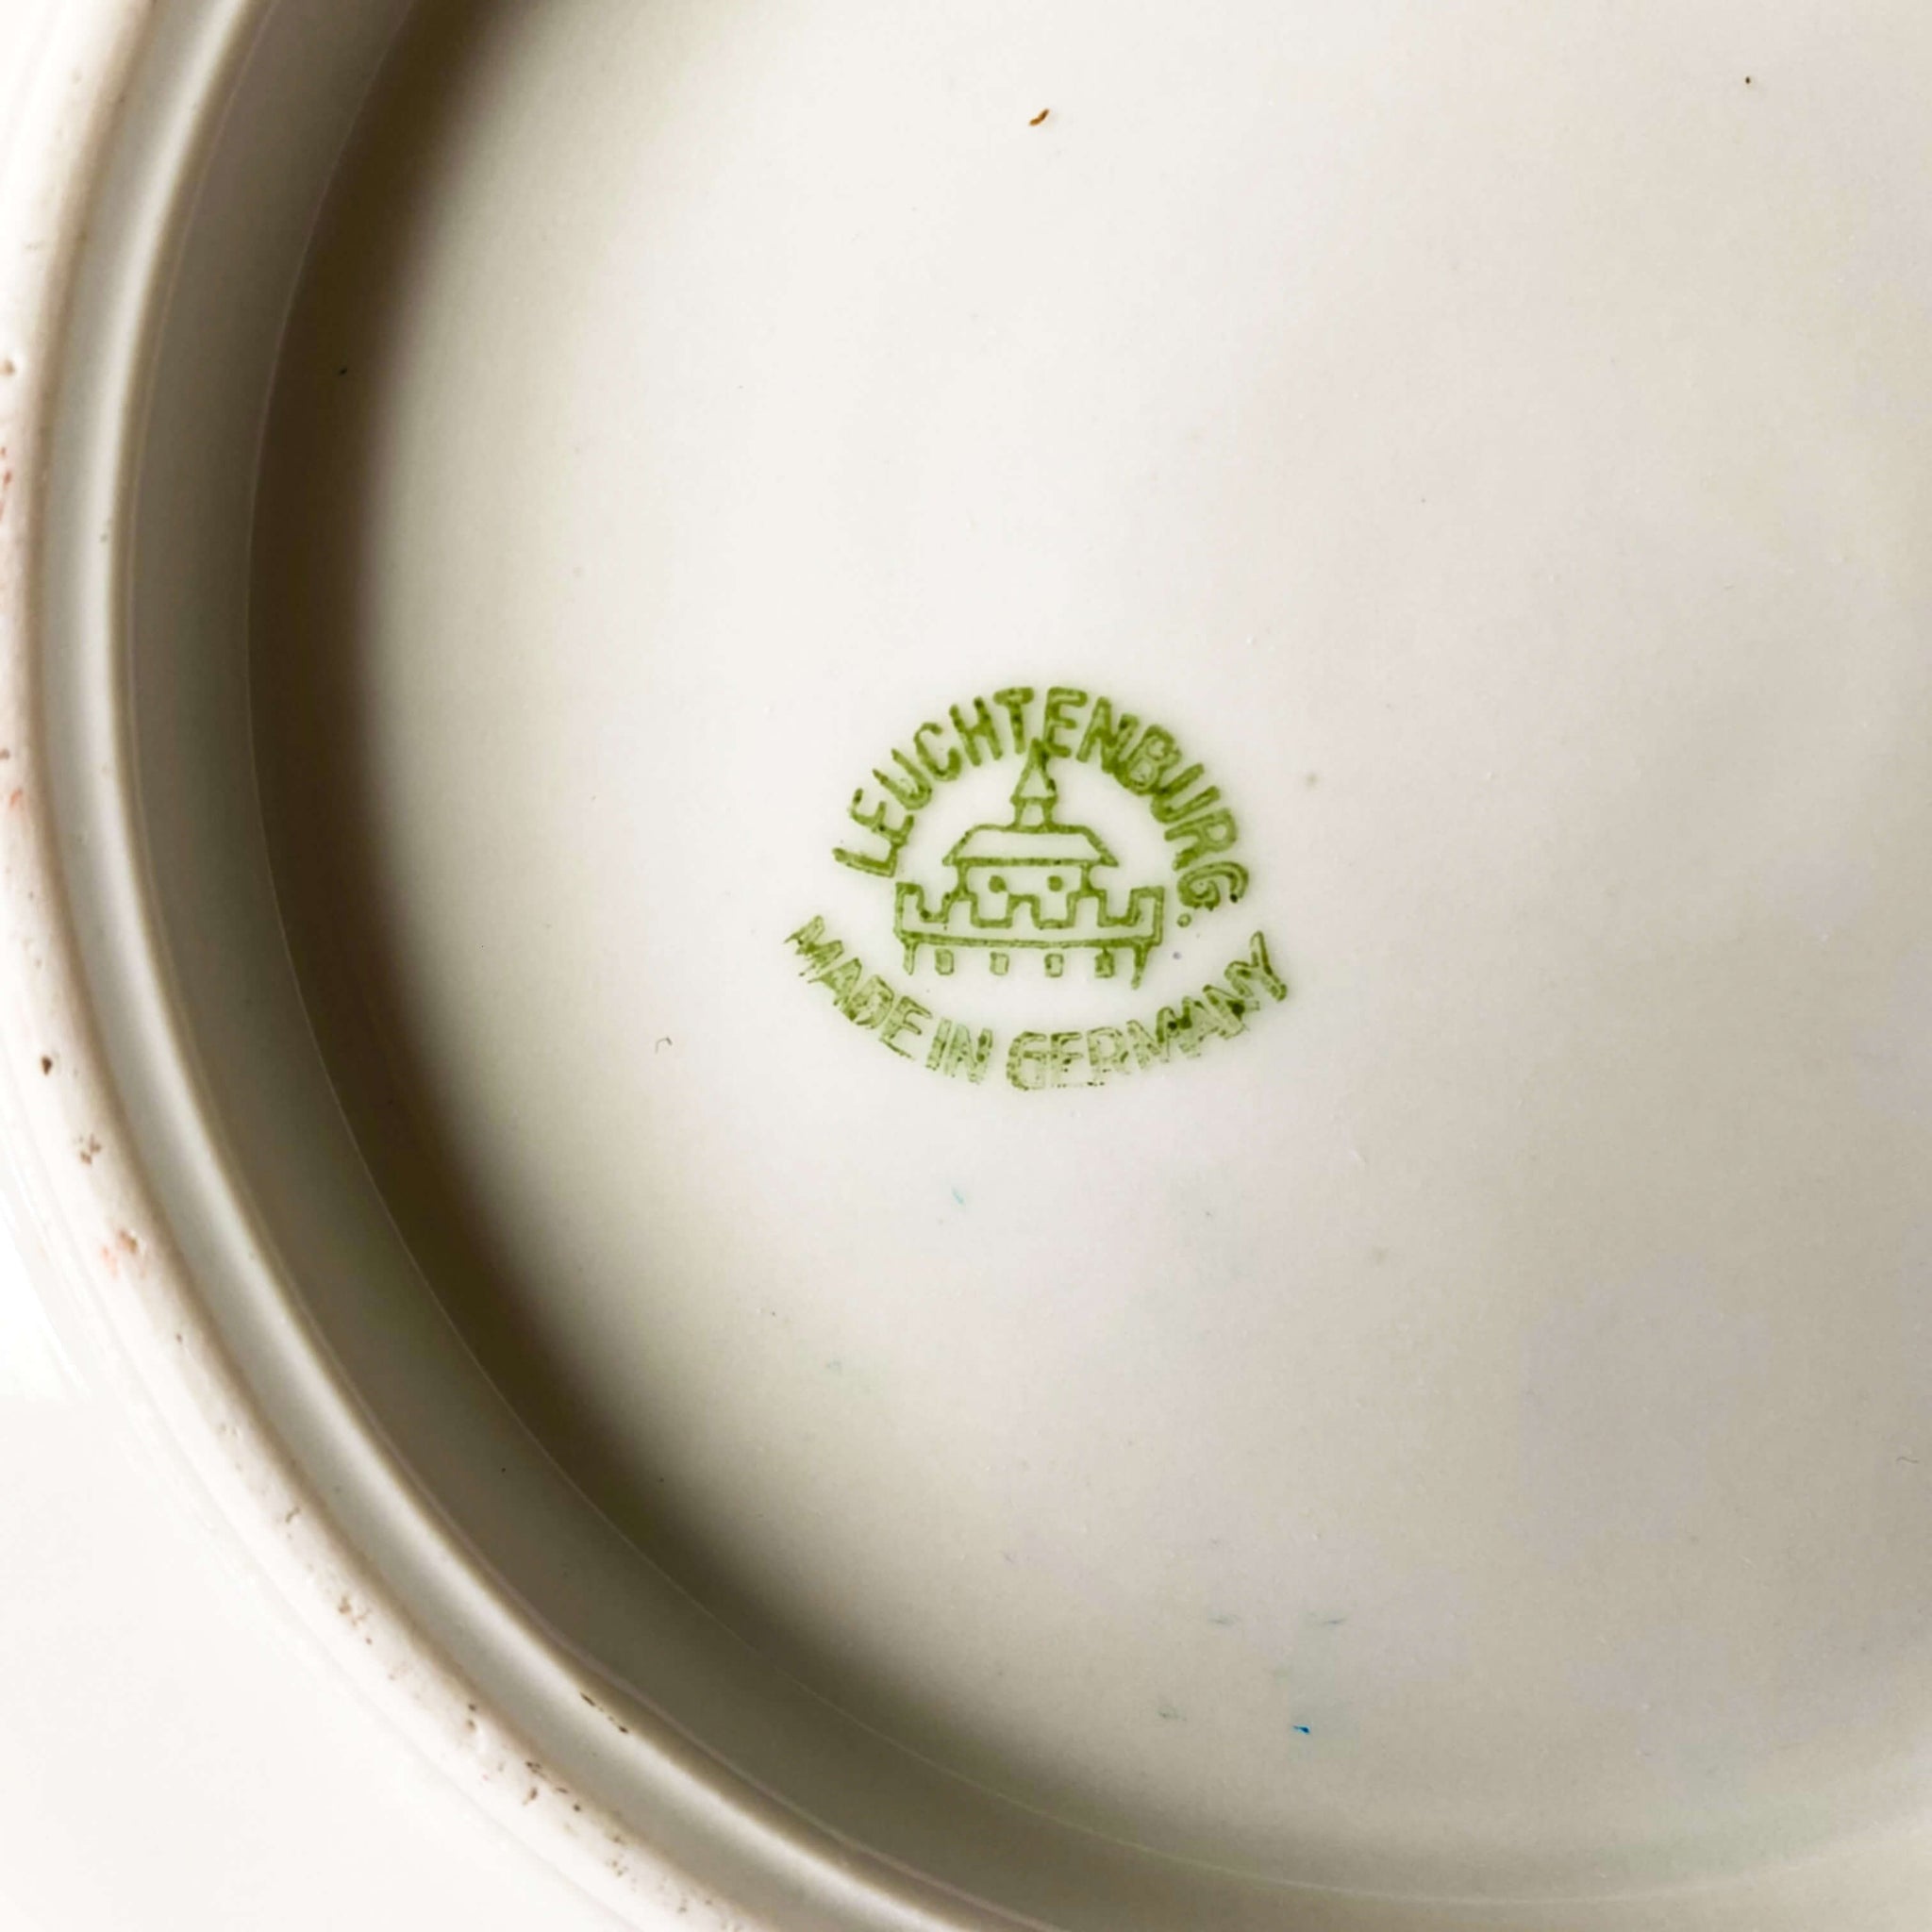 Antique German Porcelain Bowl made in Leuchtenburg - Lavender Lustreware circa 1920s/1930s